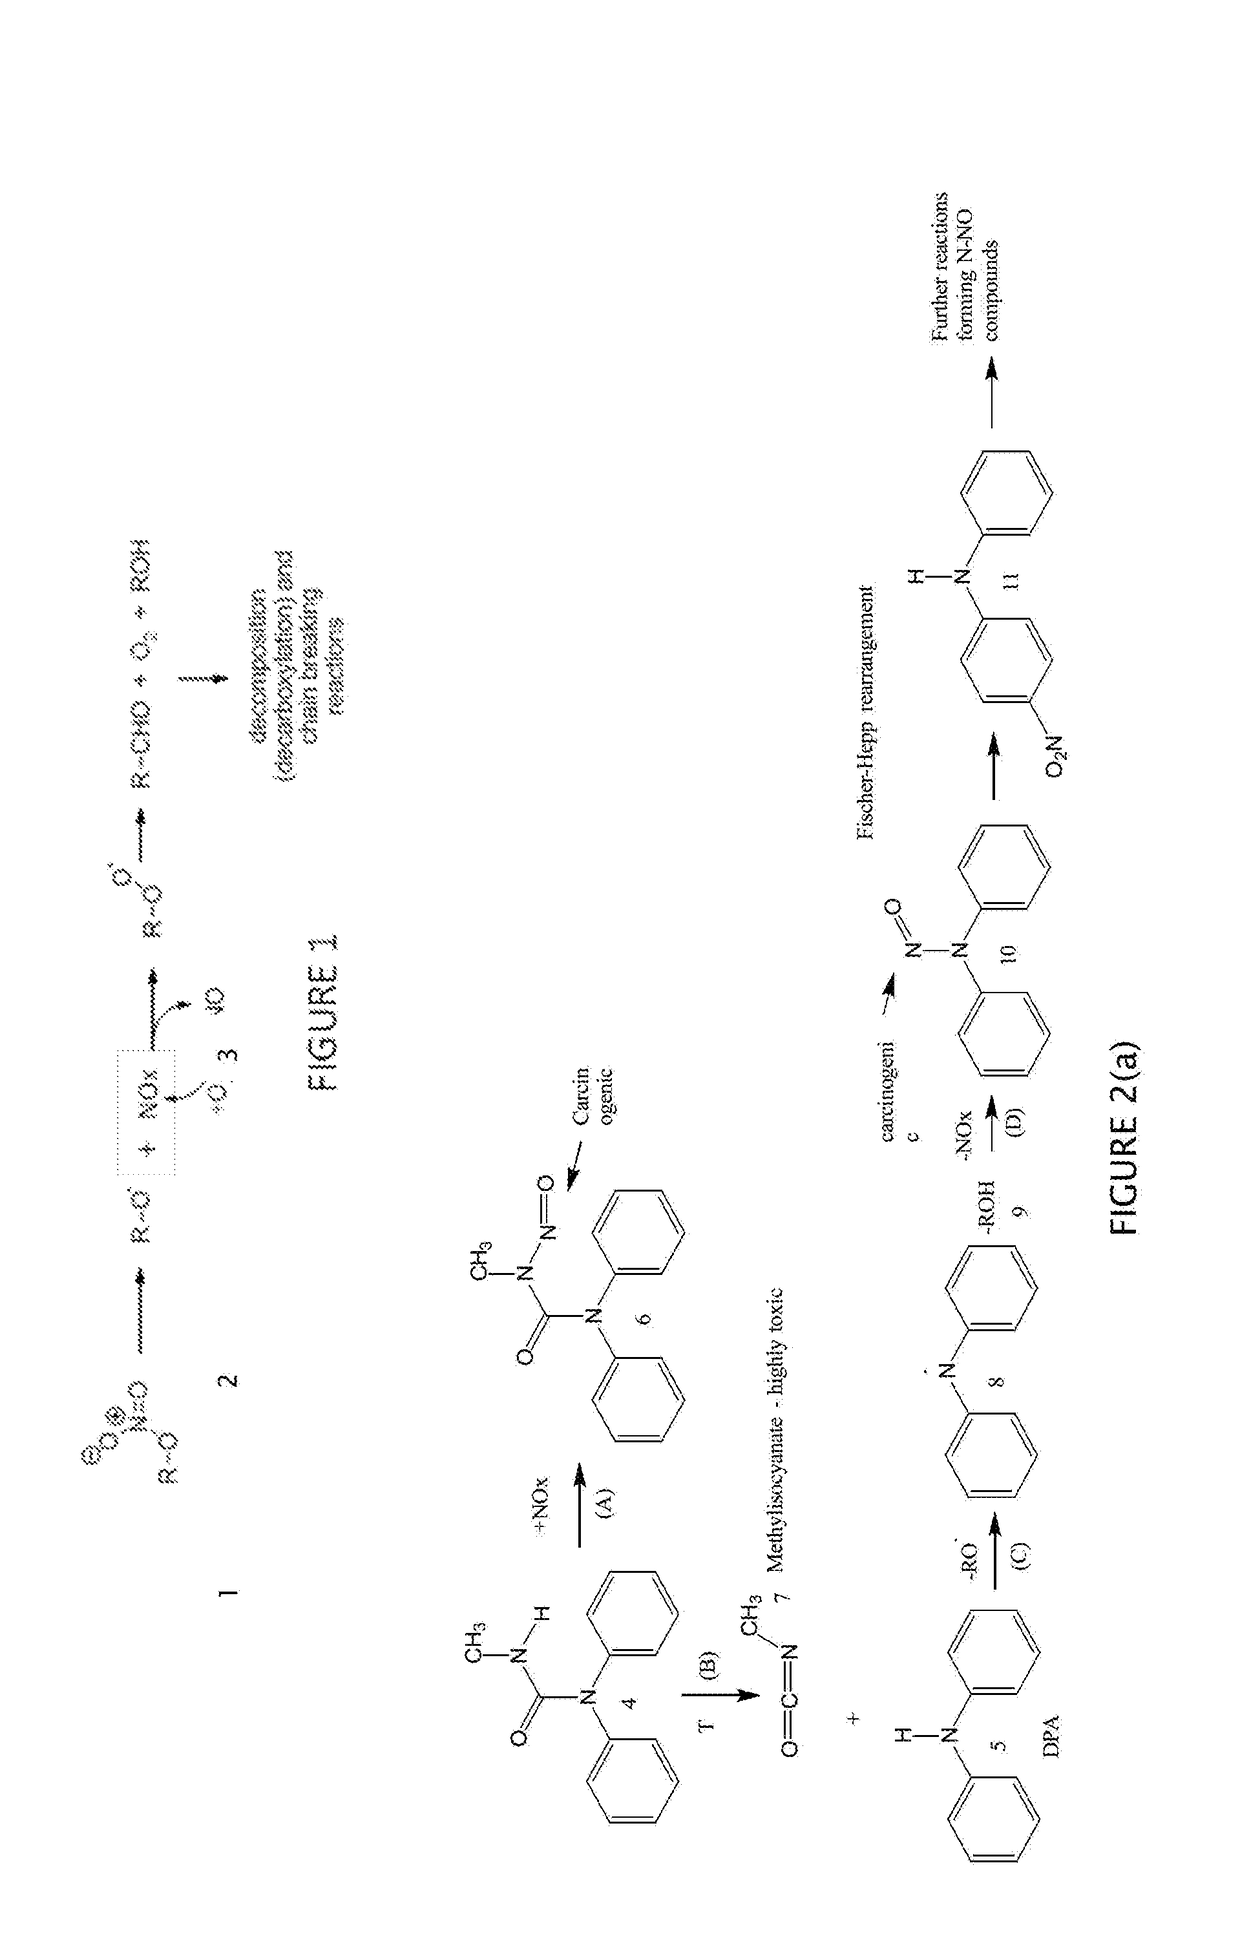 Tocopherol stabilisers for nitrocellulose-based propellants